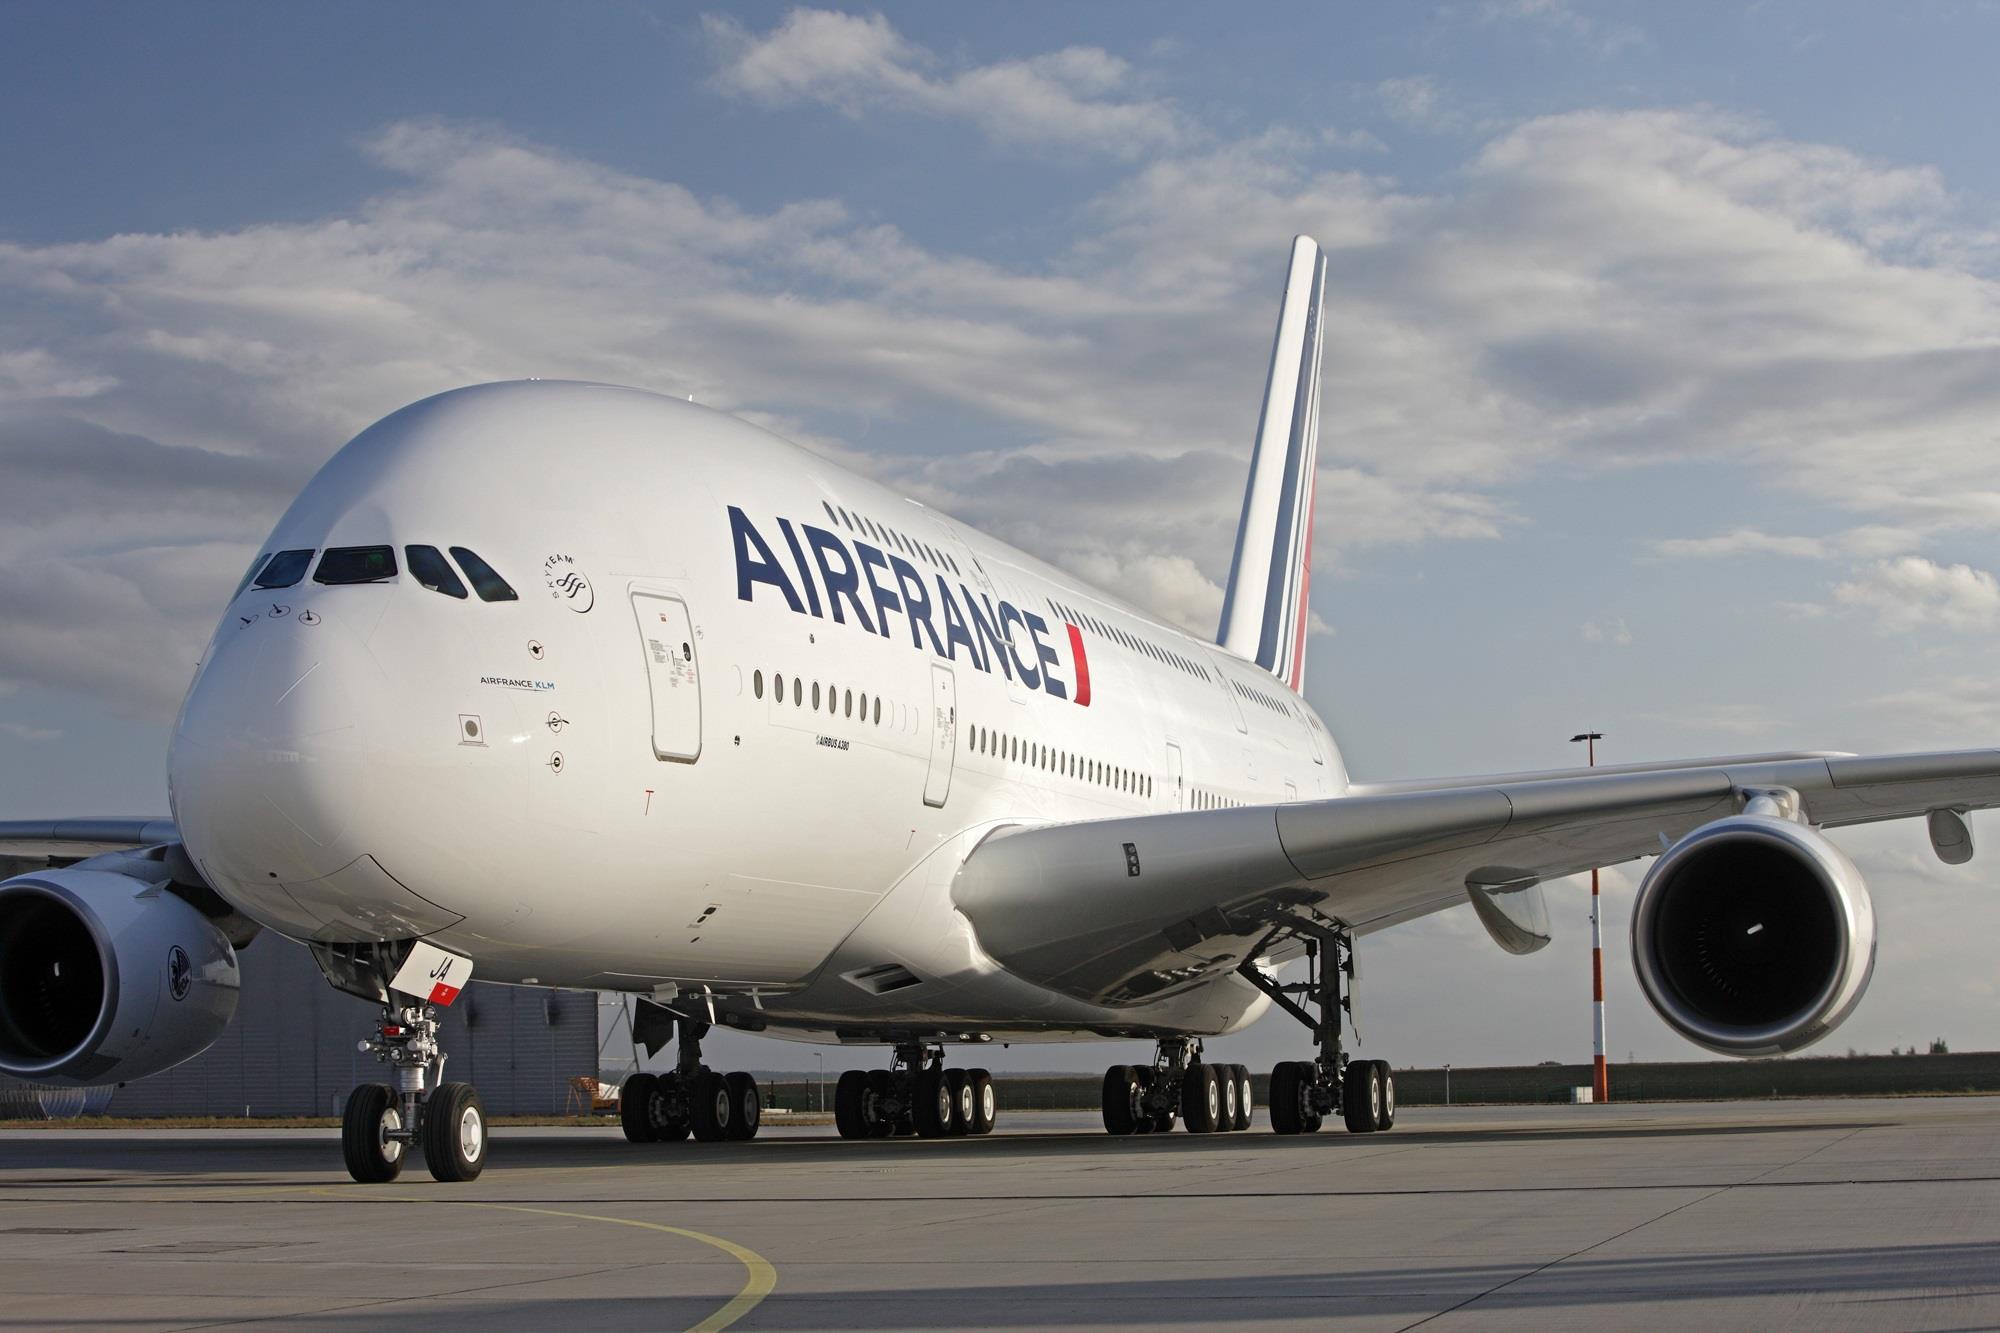 Air France direct flight to Tanzania